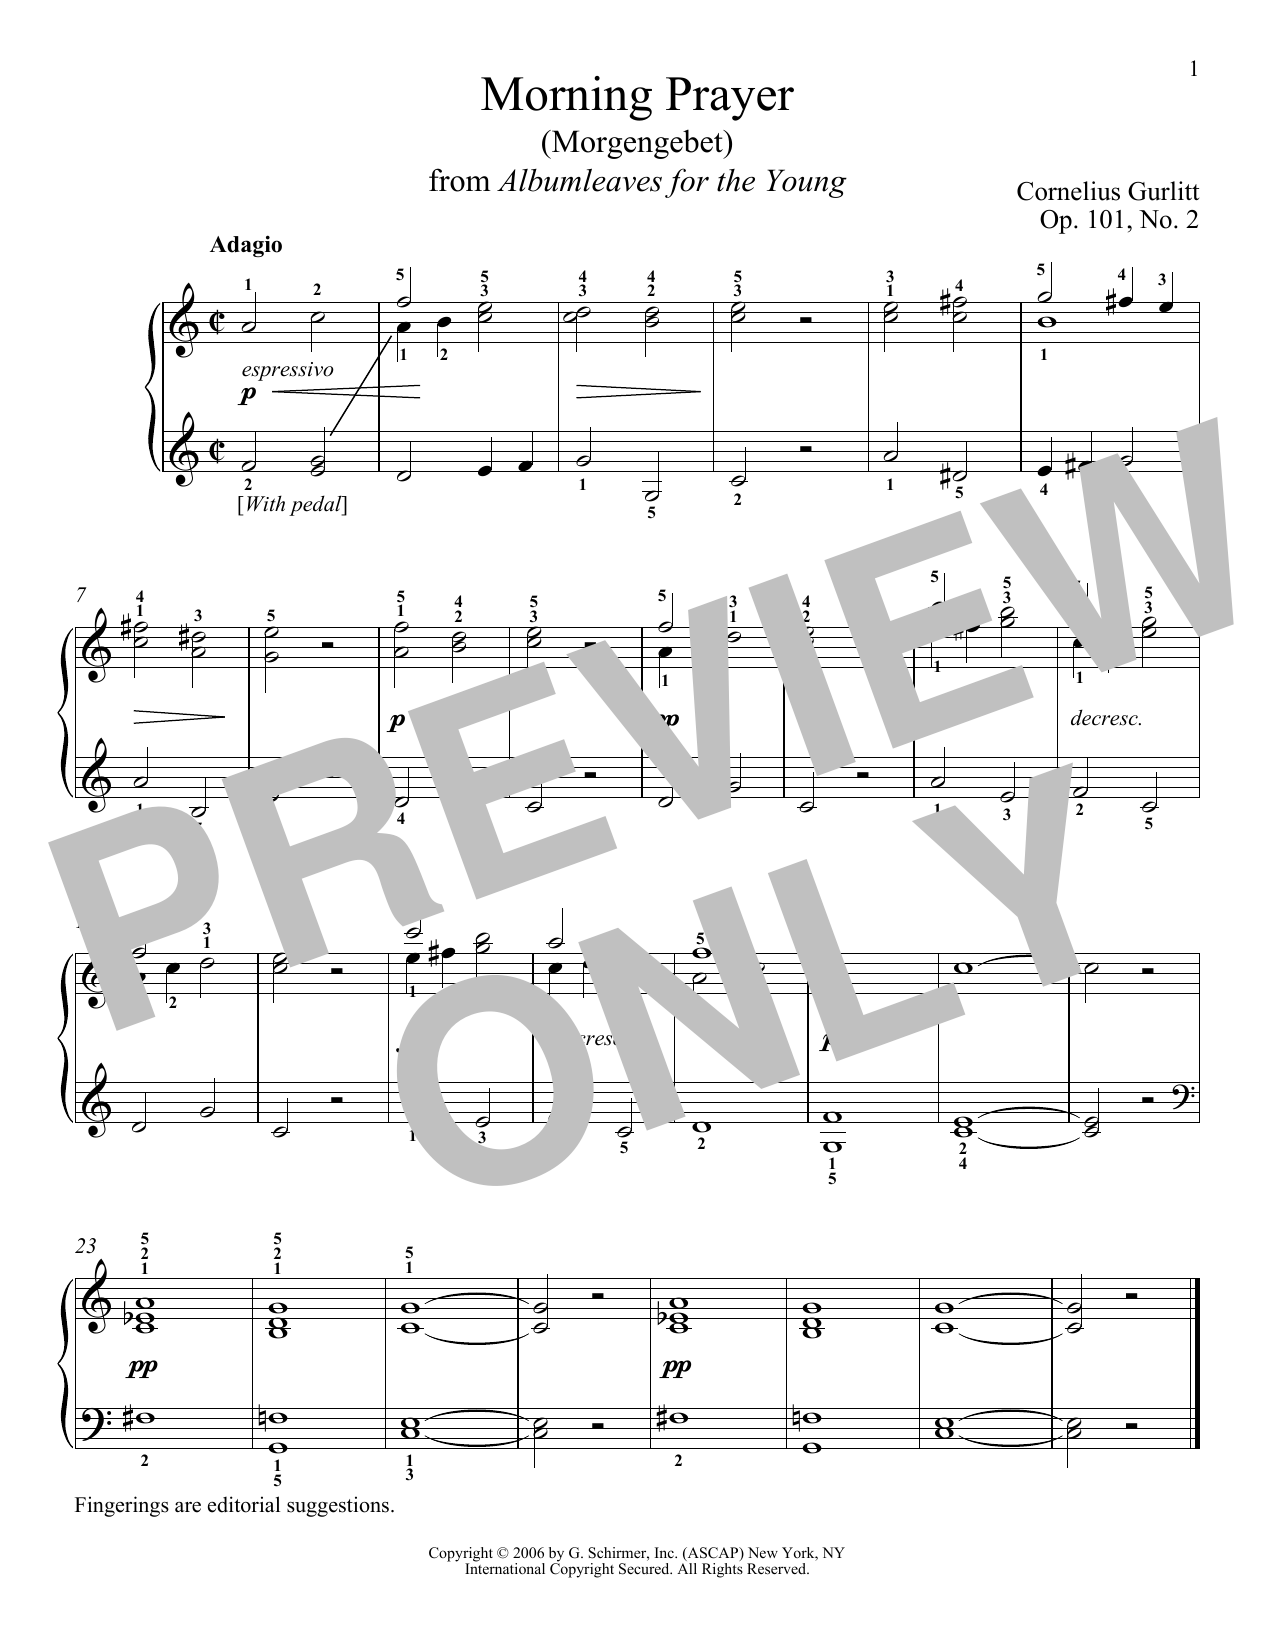 Cornelius Gurlitt Morning Prayer (Morgengebet), Op. 101, No. 2 Sheet Music Notes & Chords for Piano - Download or Print PDF